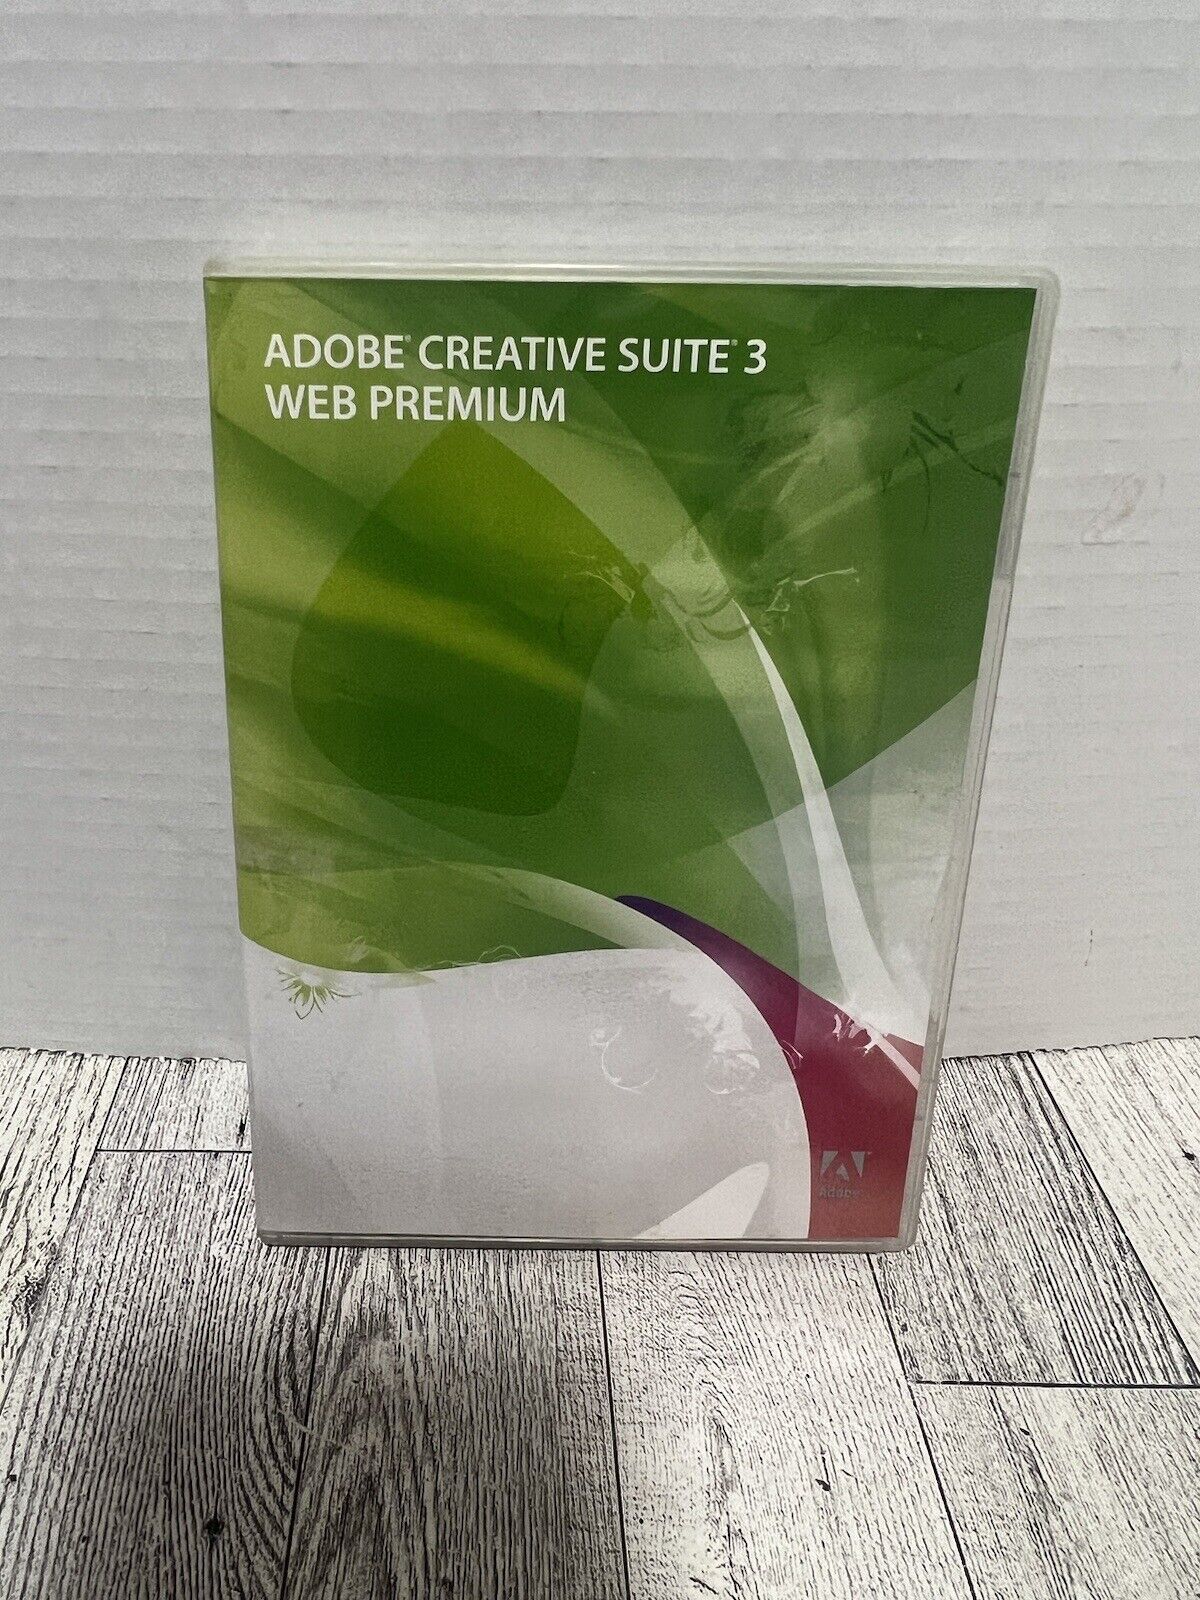 Adobe Creative Suite 3: Web Premium (Apple Mac, 2007) Complete w/Serial Number